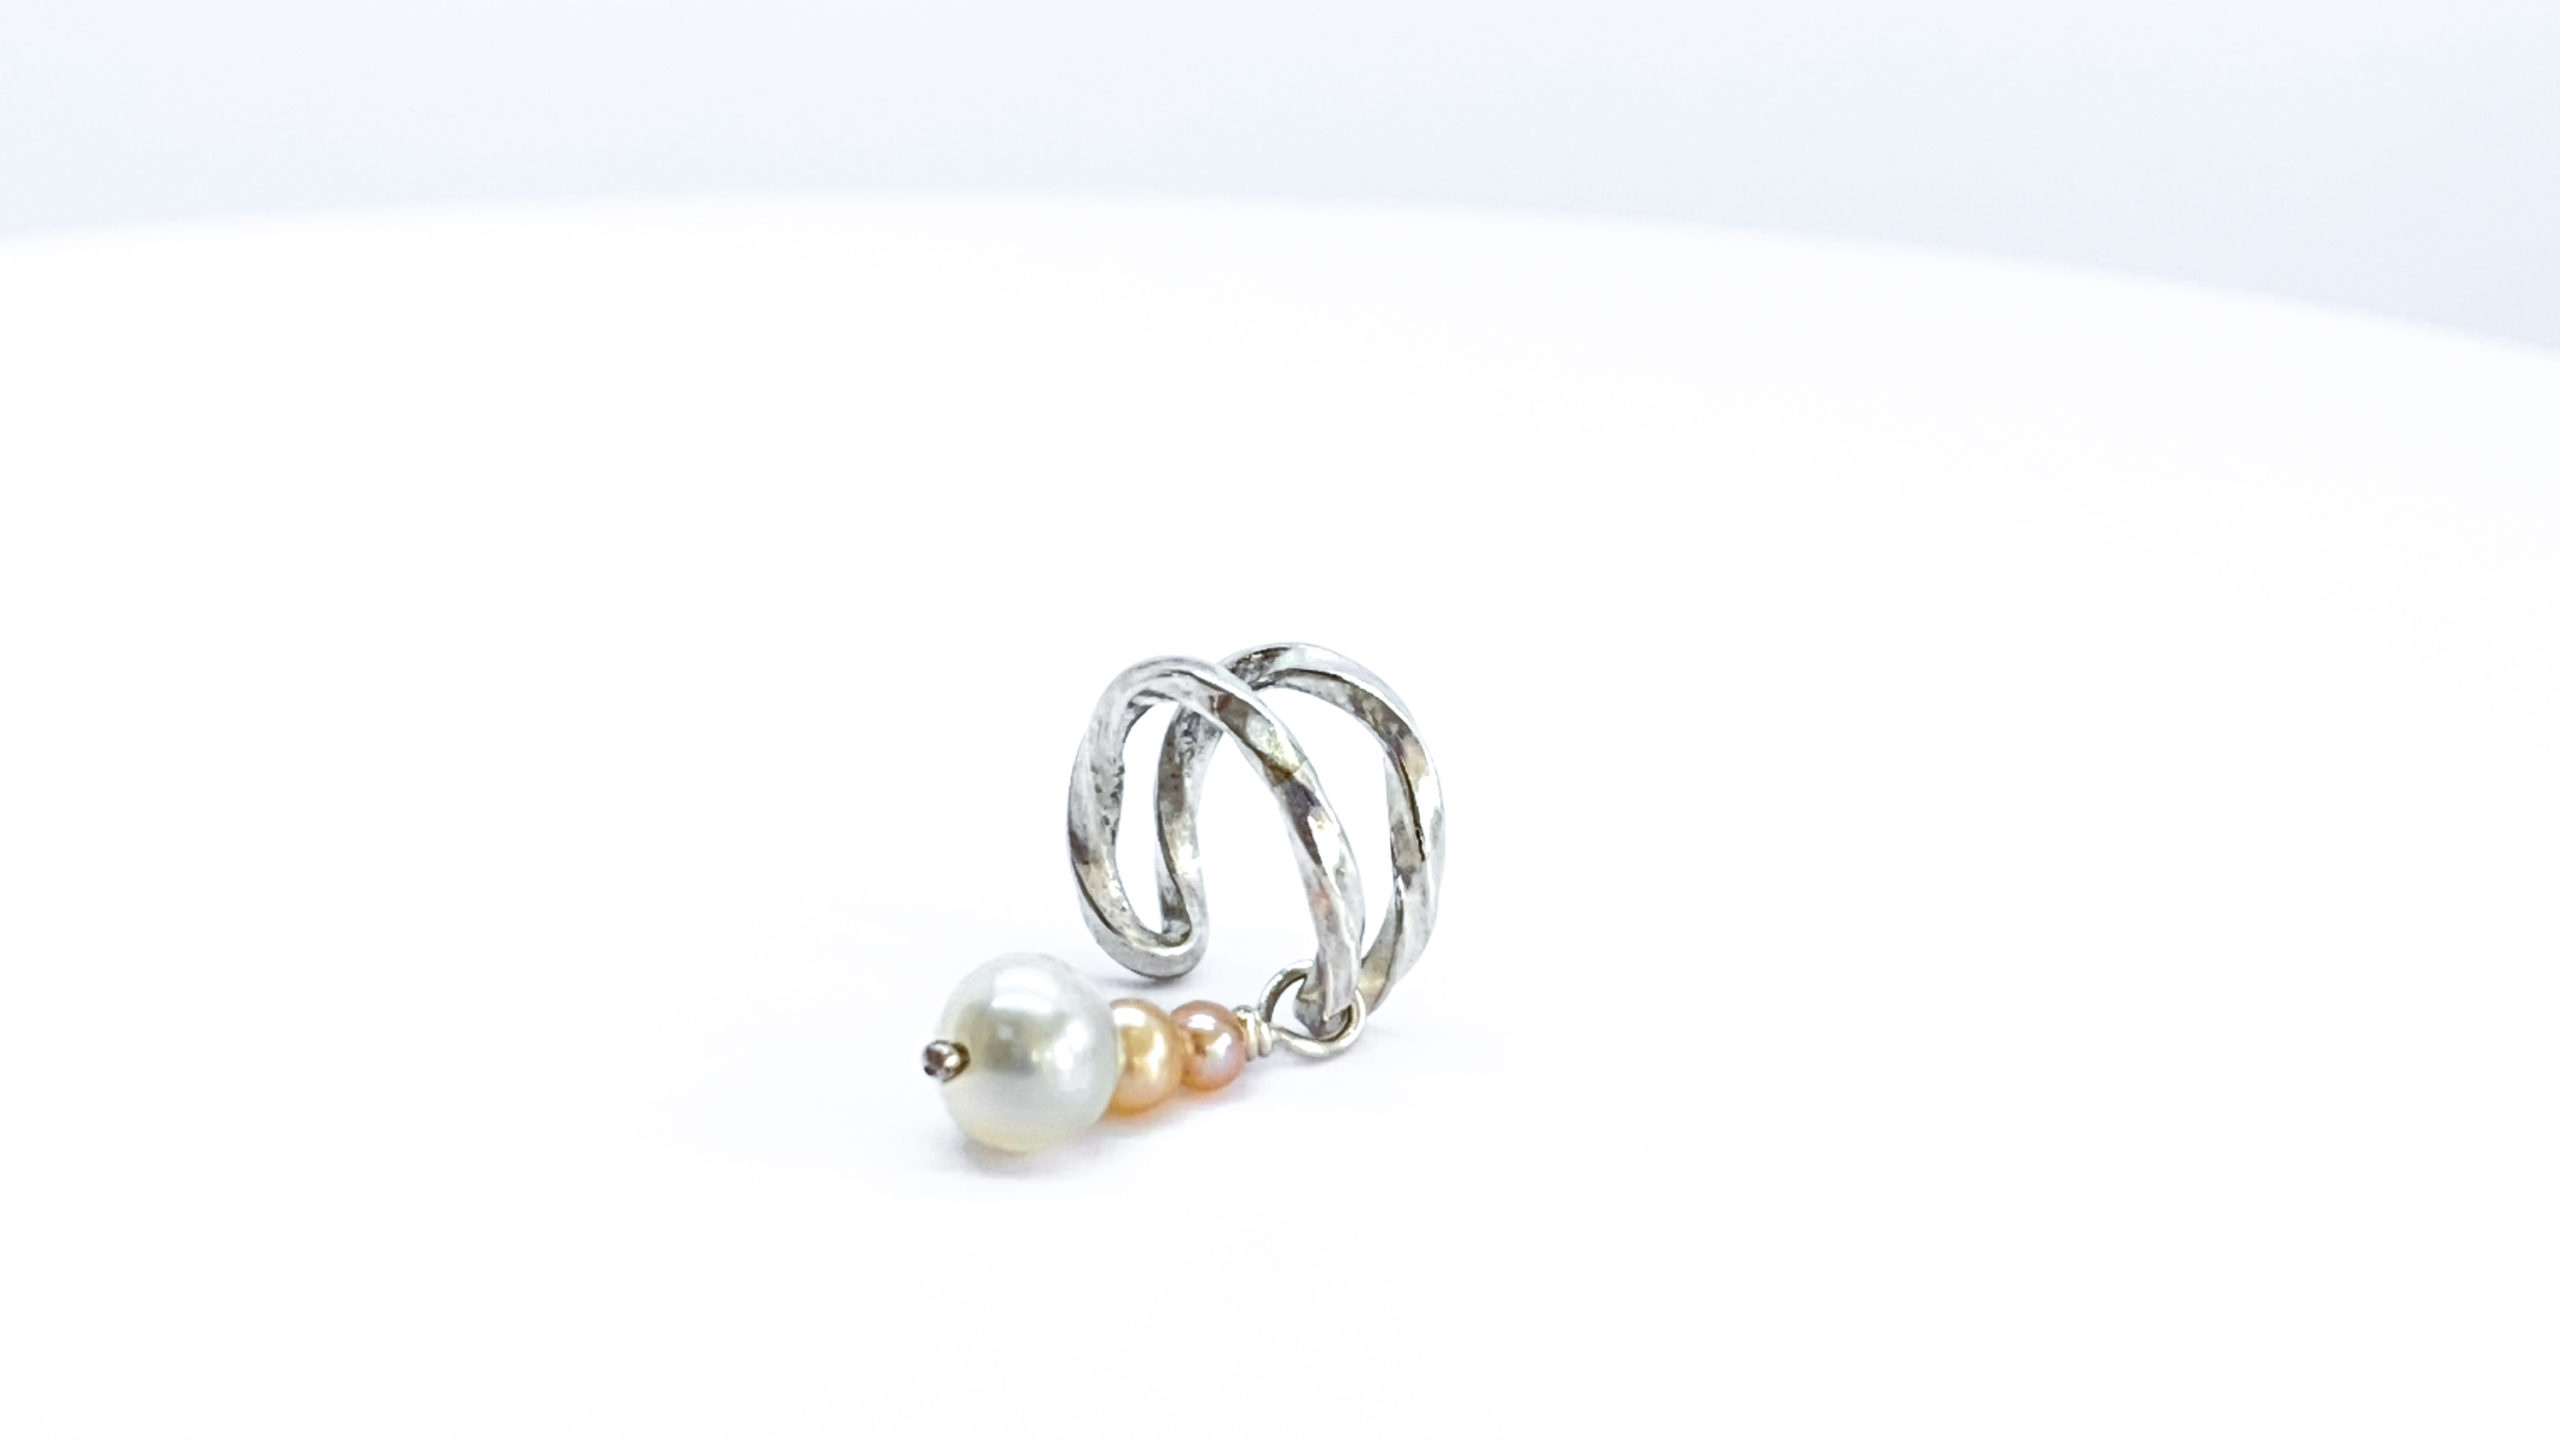 Sterling silver ear cuff, Pearl drop pendant, Unique and artistic design, Contemporary and elegant, 2560x1440 HD Desktop